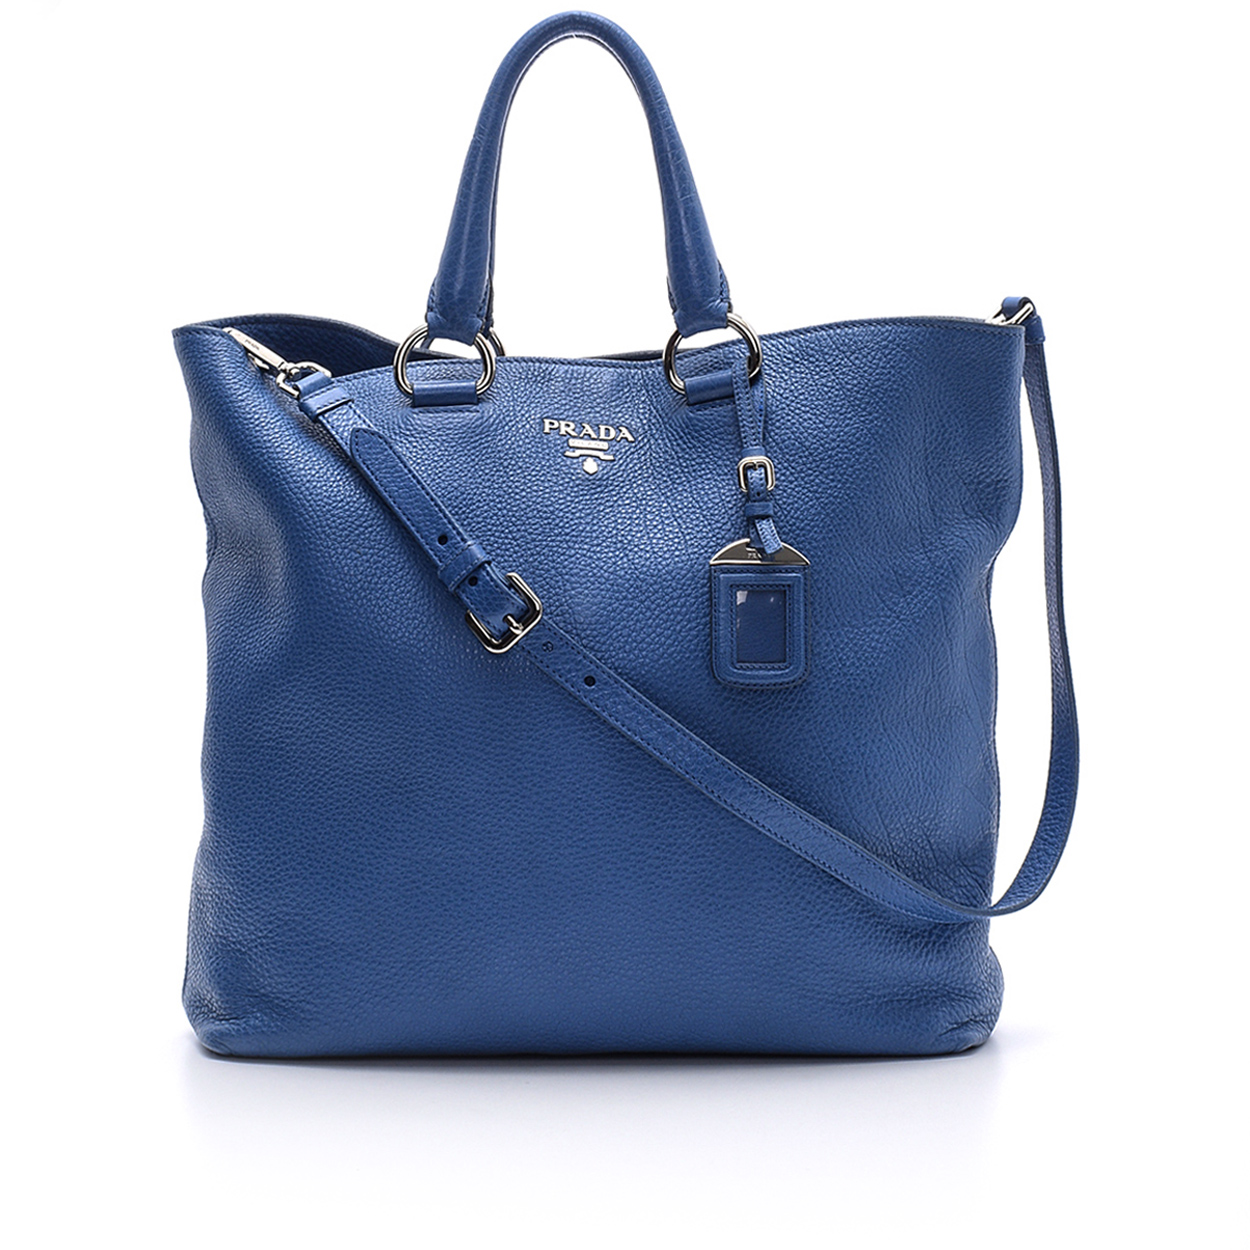 Prada - Blue Daino Vitello Leather Large Shopping Tote Bag